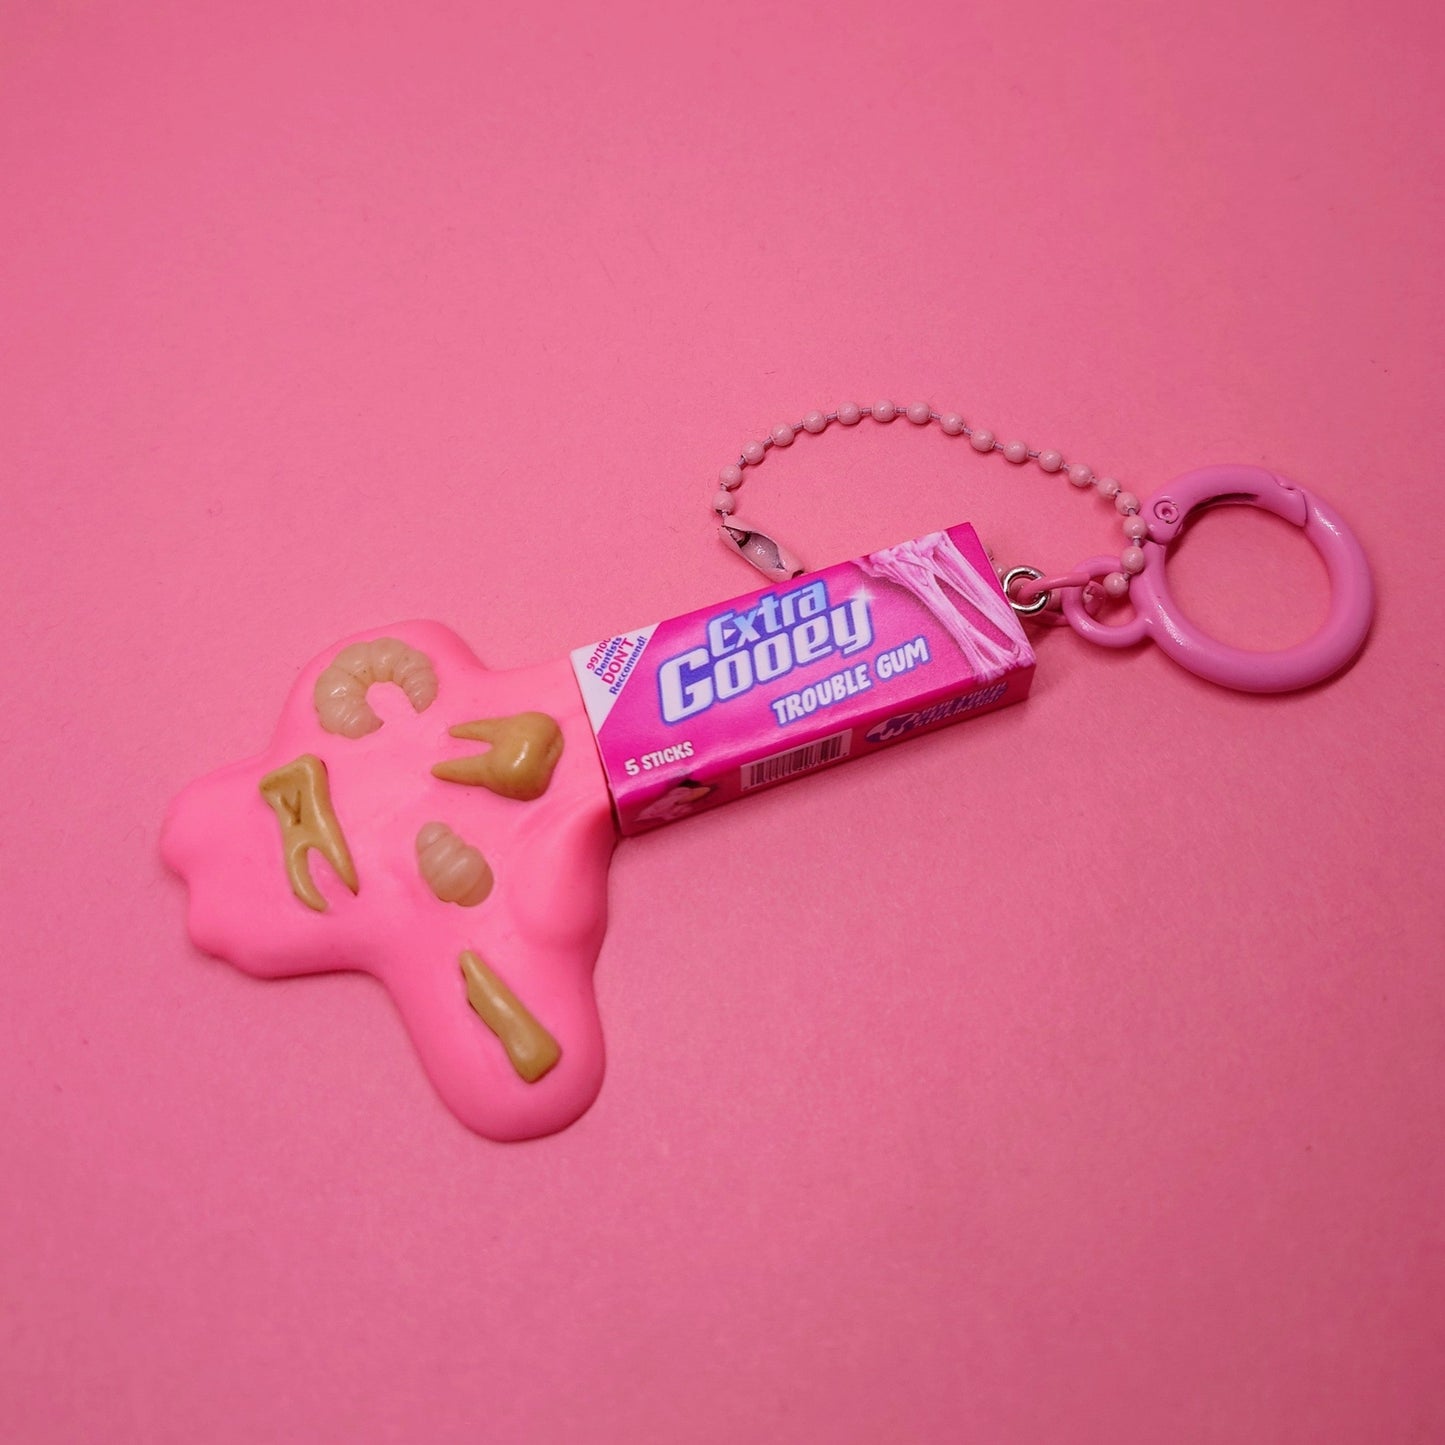 Extra Gooey Trouble Gum Keychain